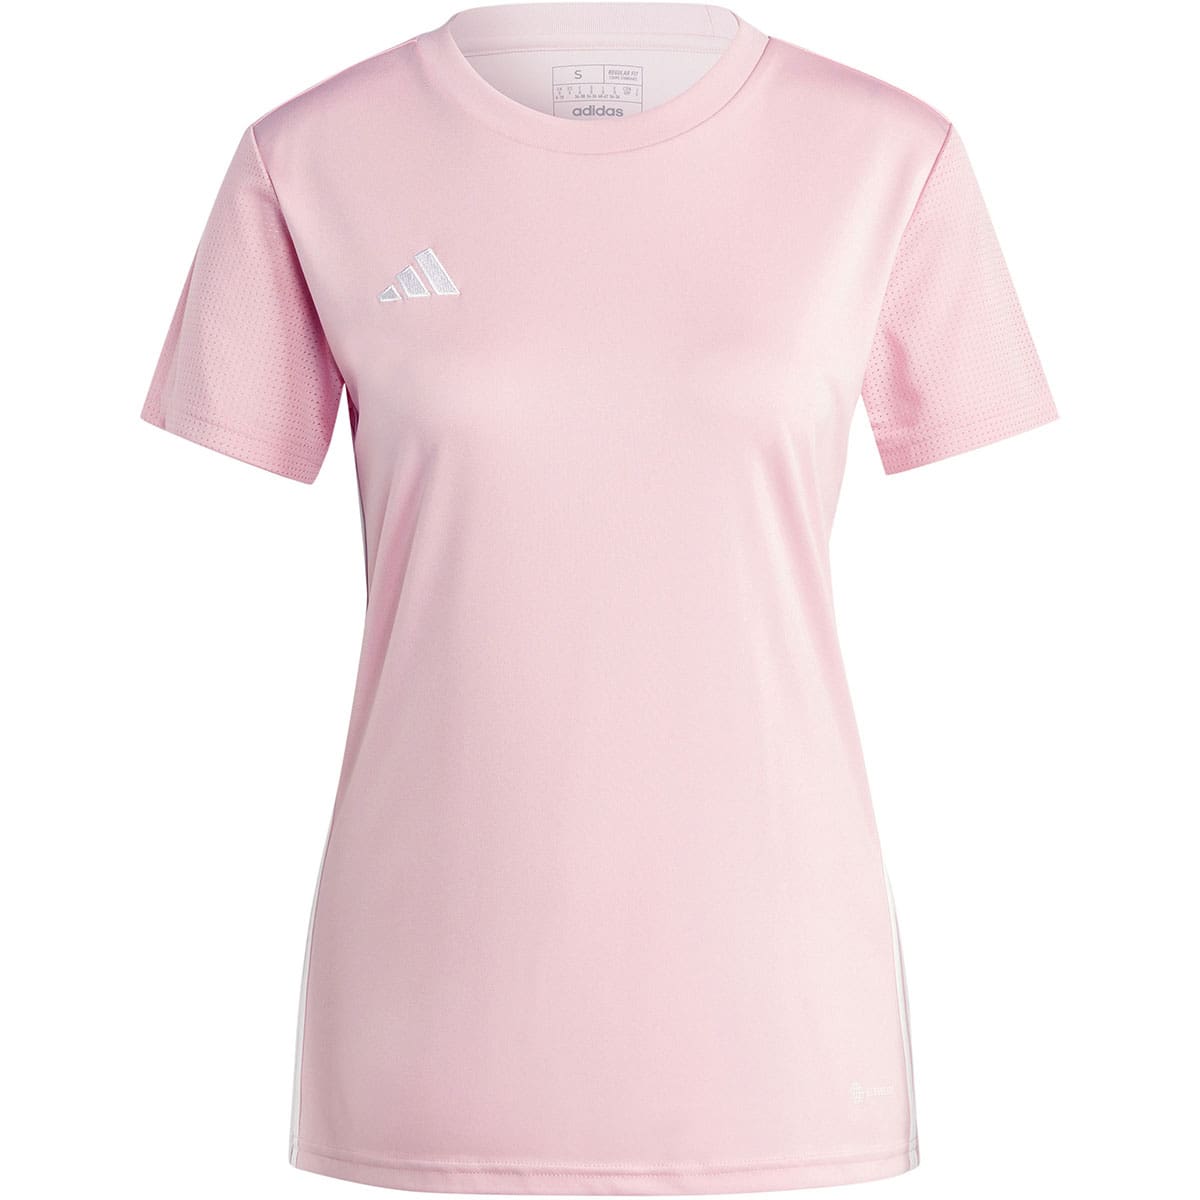 Adidas Damen Trikot Tabela 23 rosa-weiß